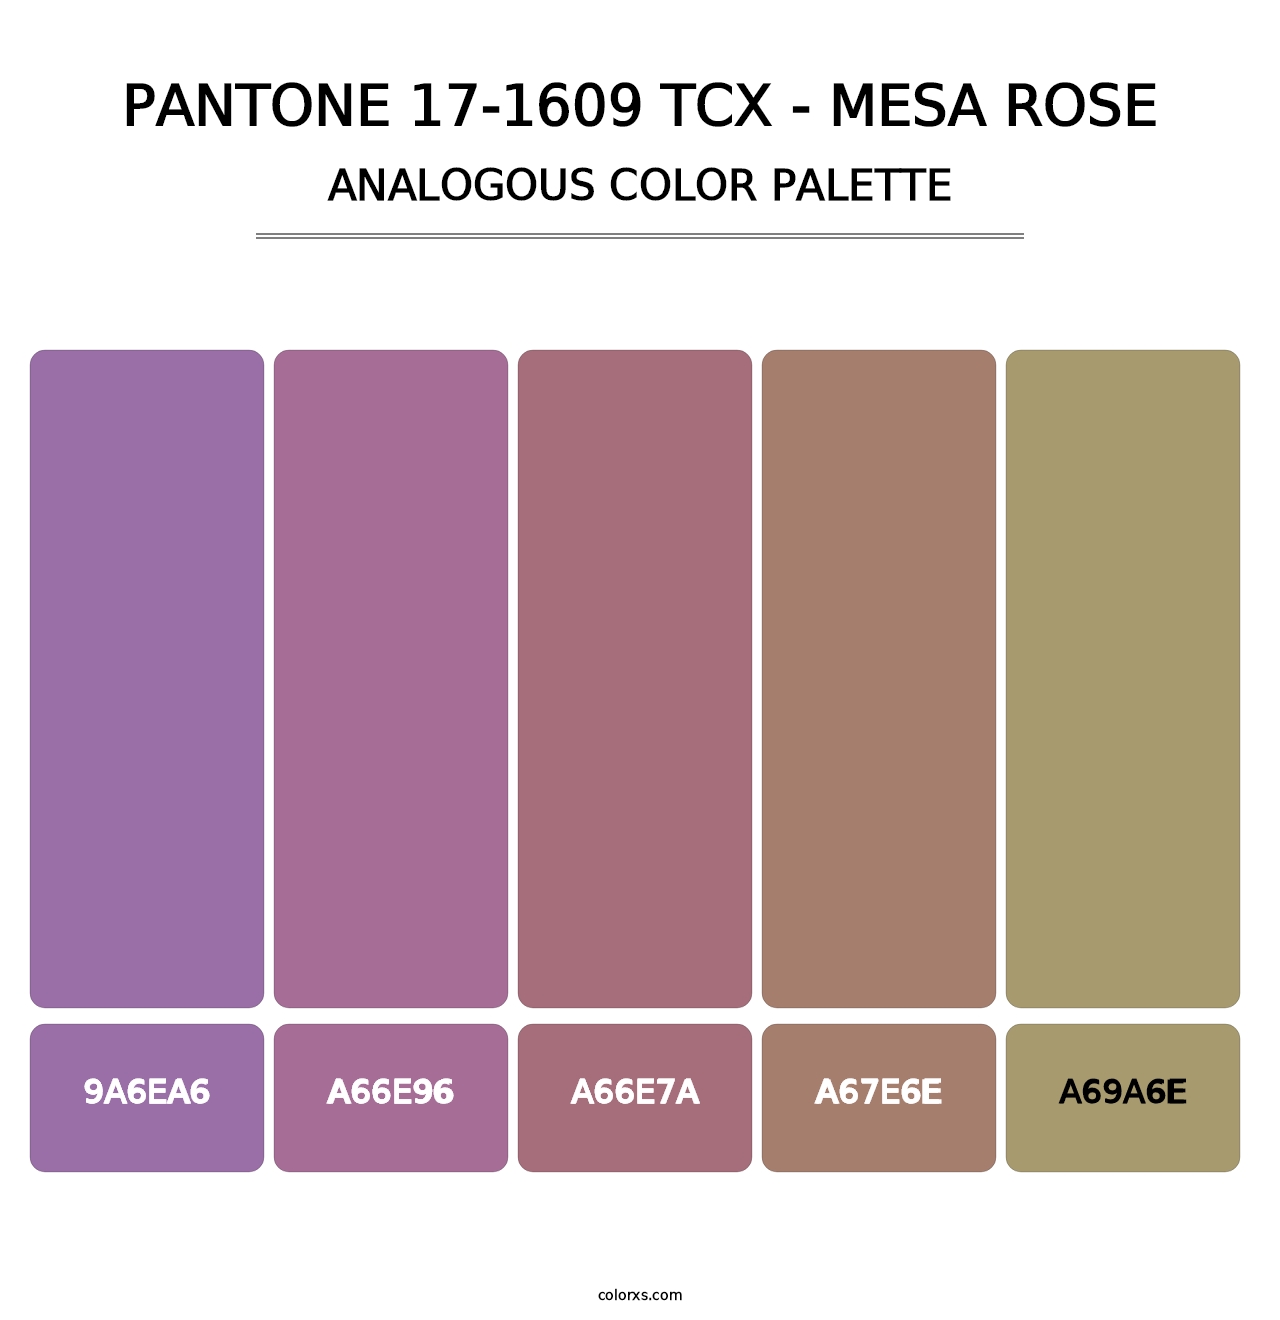 PANTONE 17-1609 TCX - Mesa Rose - Analogous Color Palette